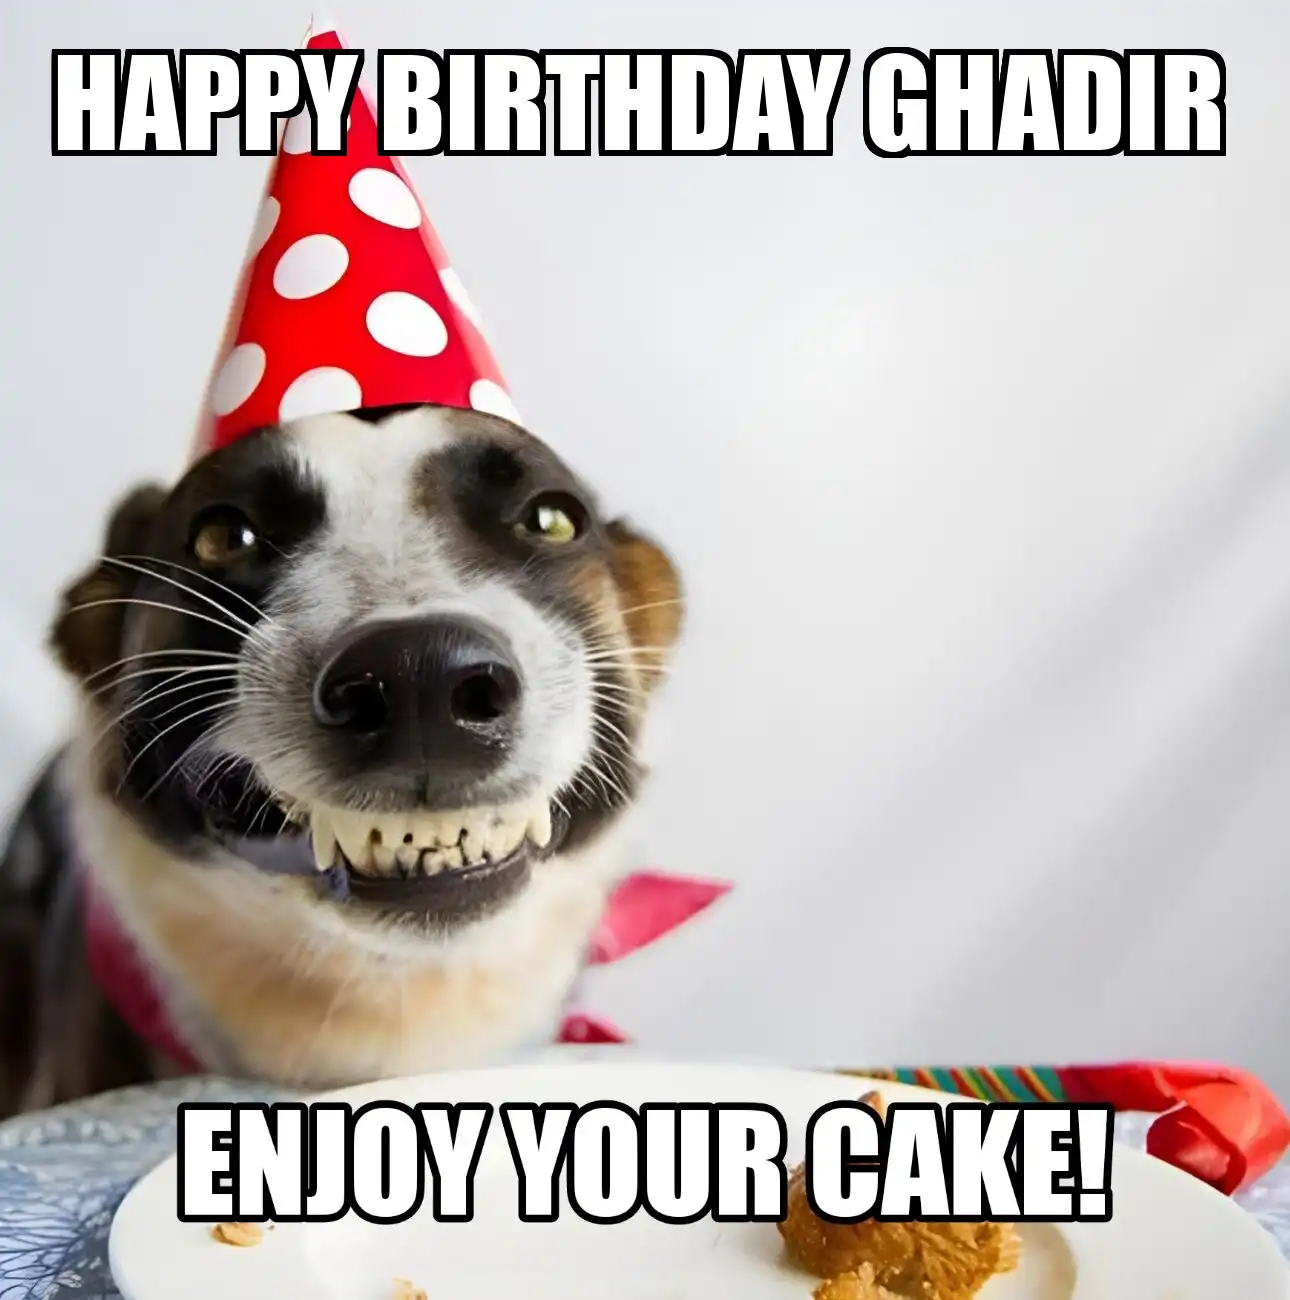 Happy Birthday Ghadir Enjoy Your Cake Dog Meme